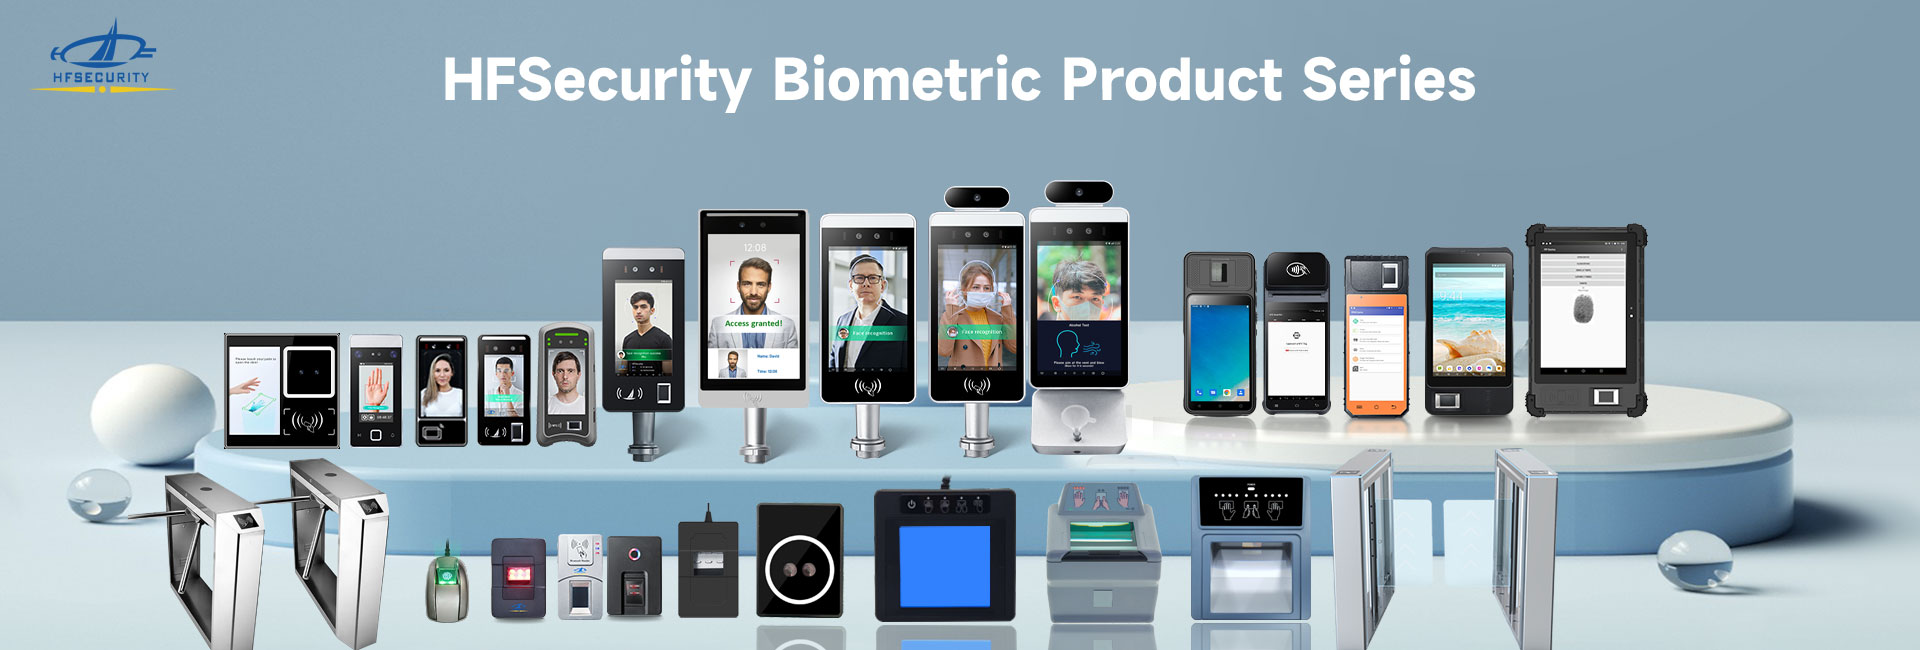 Biometrics Series Products